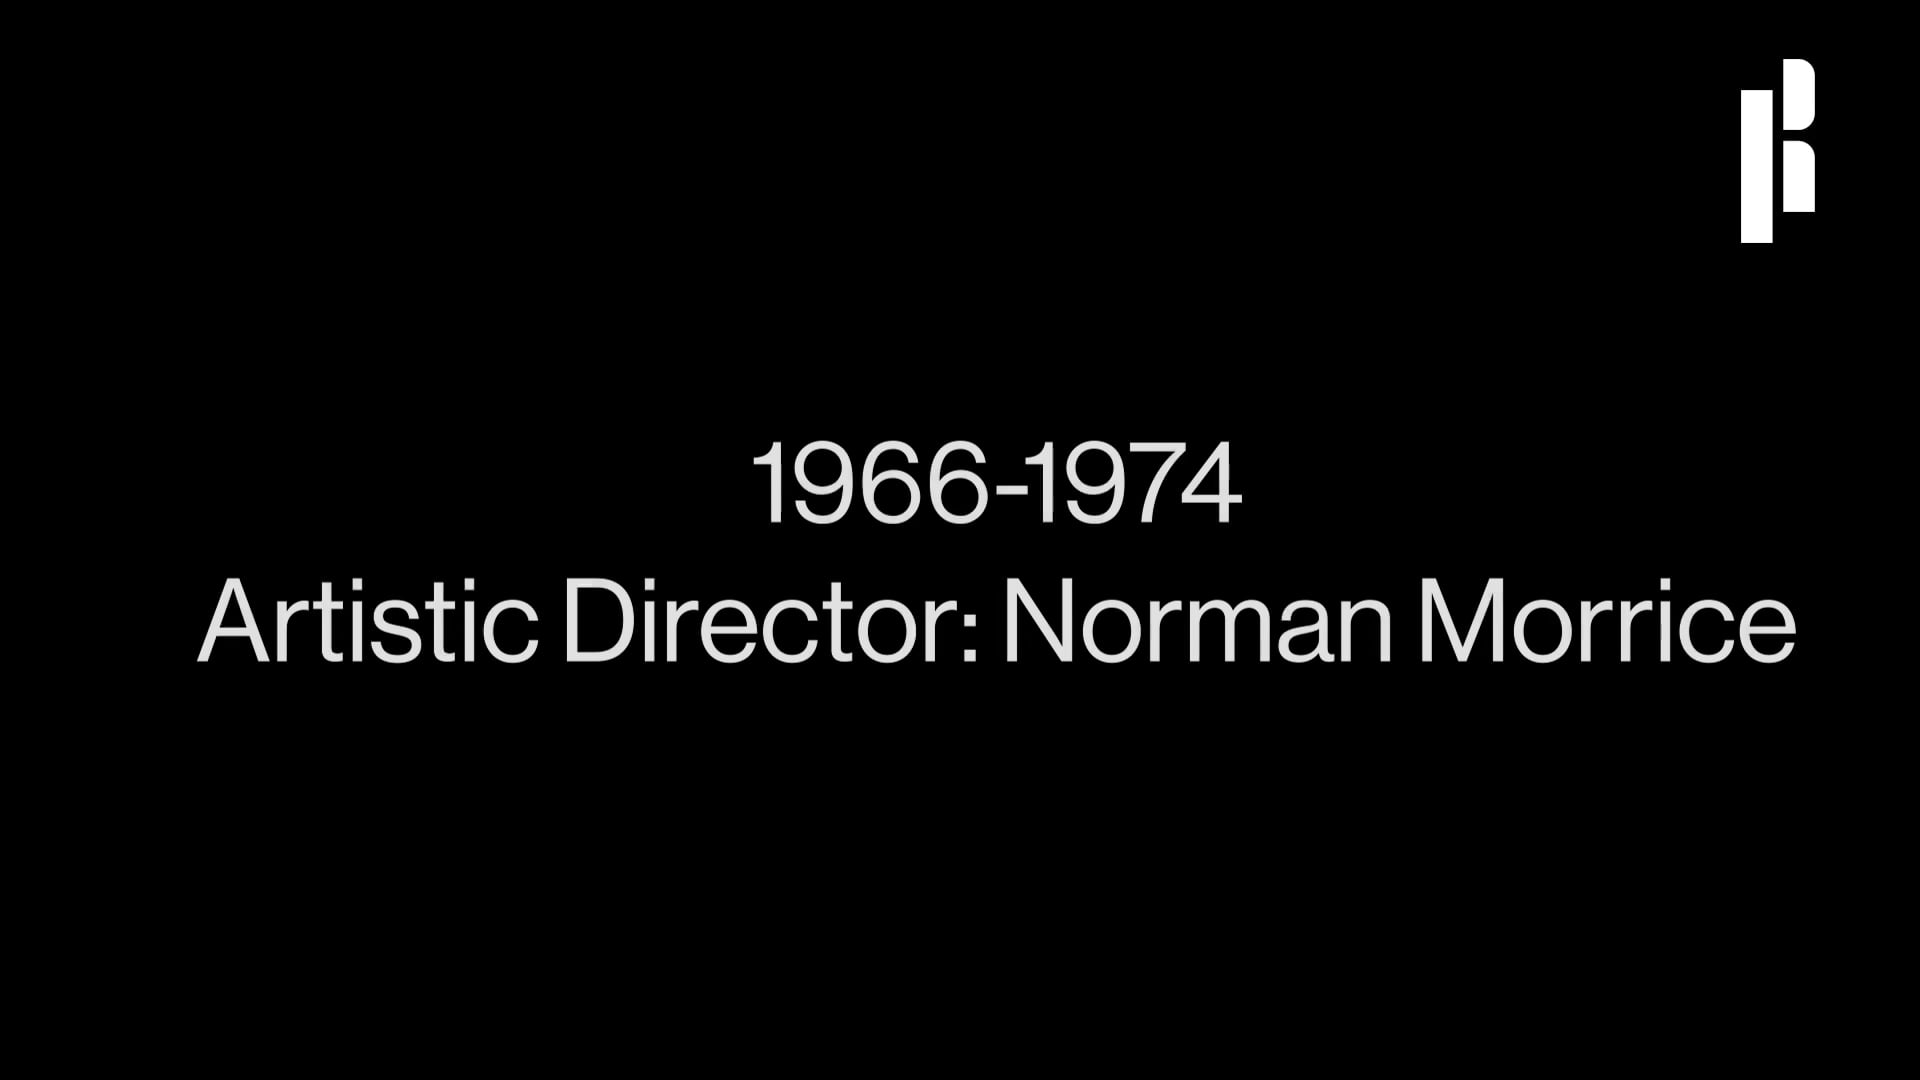 Artistic director norman morrice 1960 - 1974.